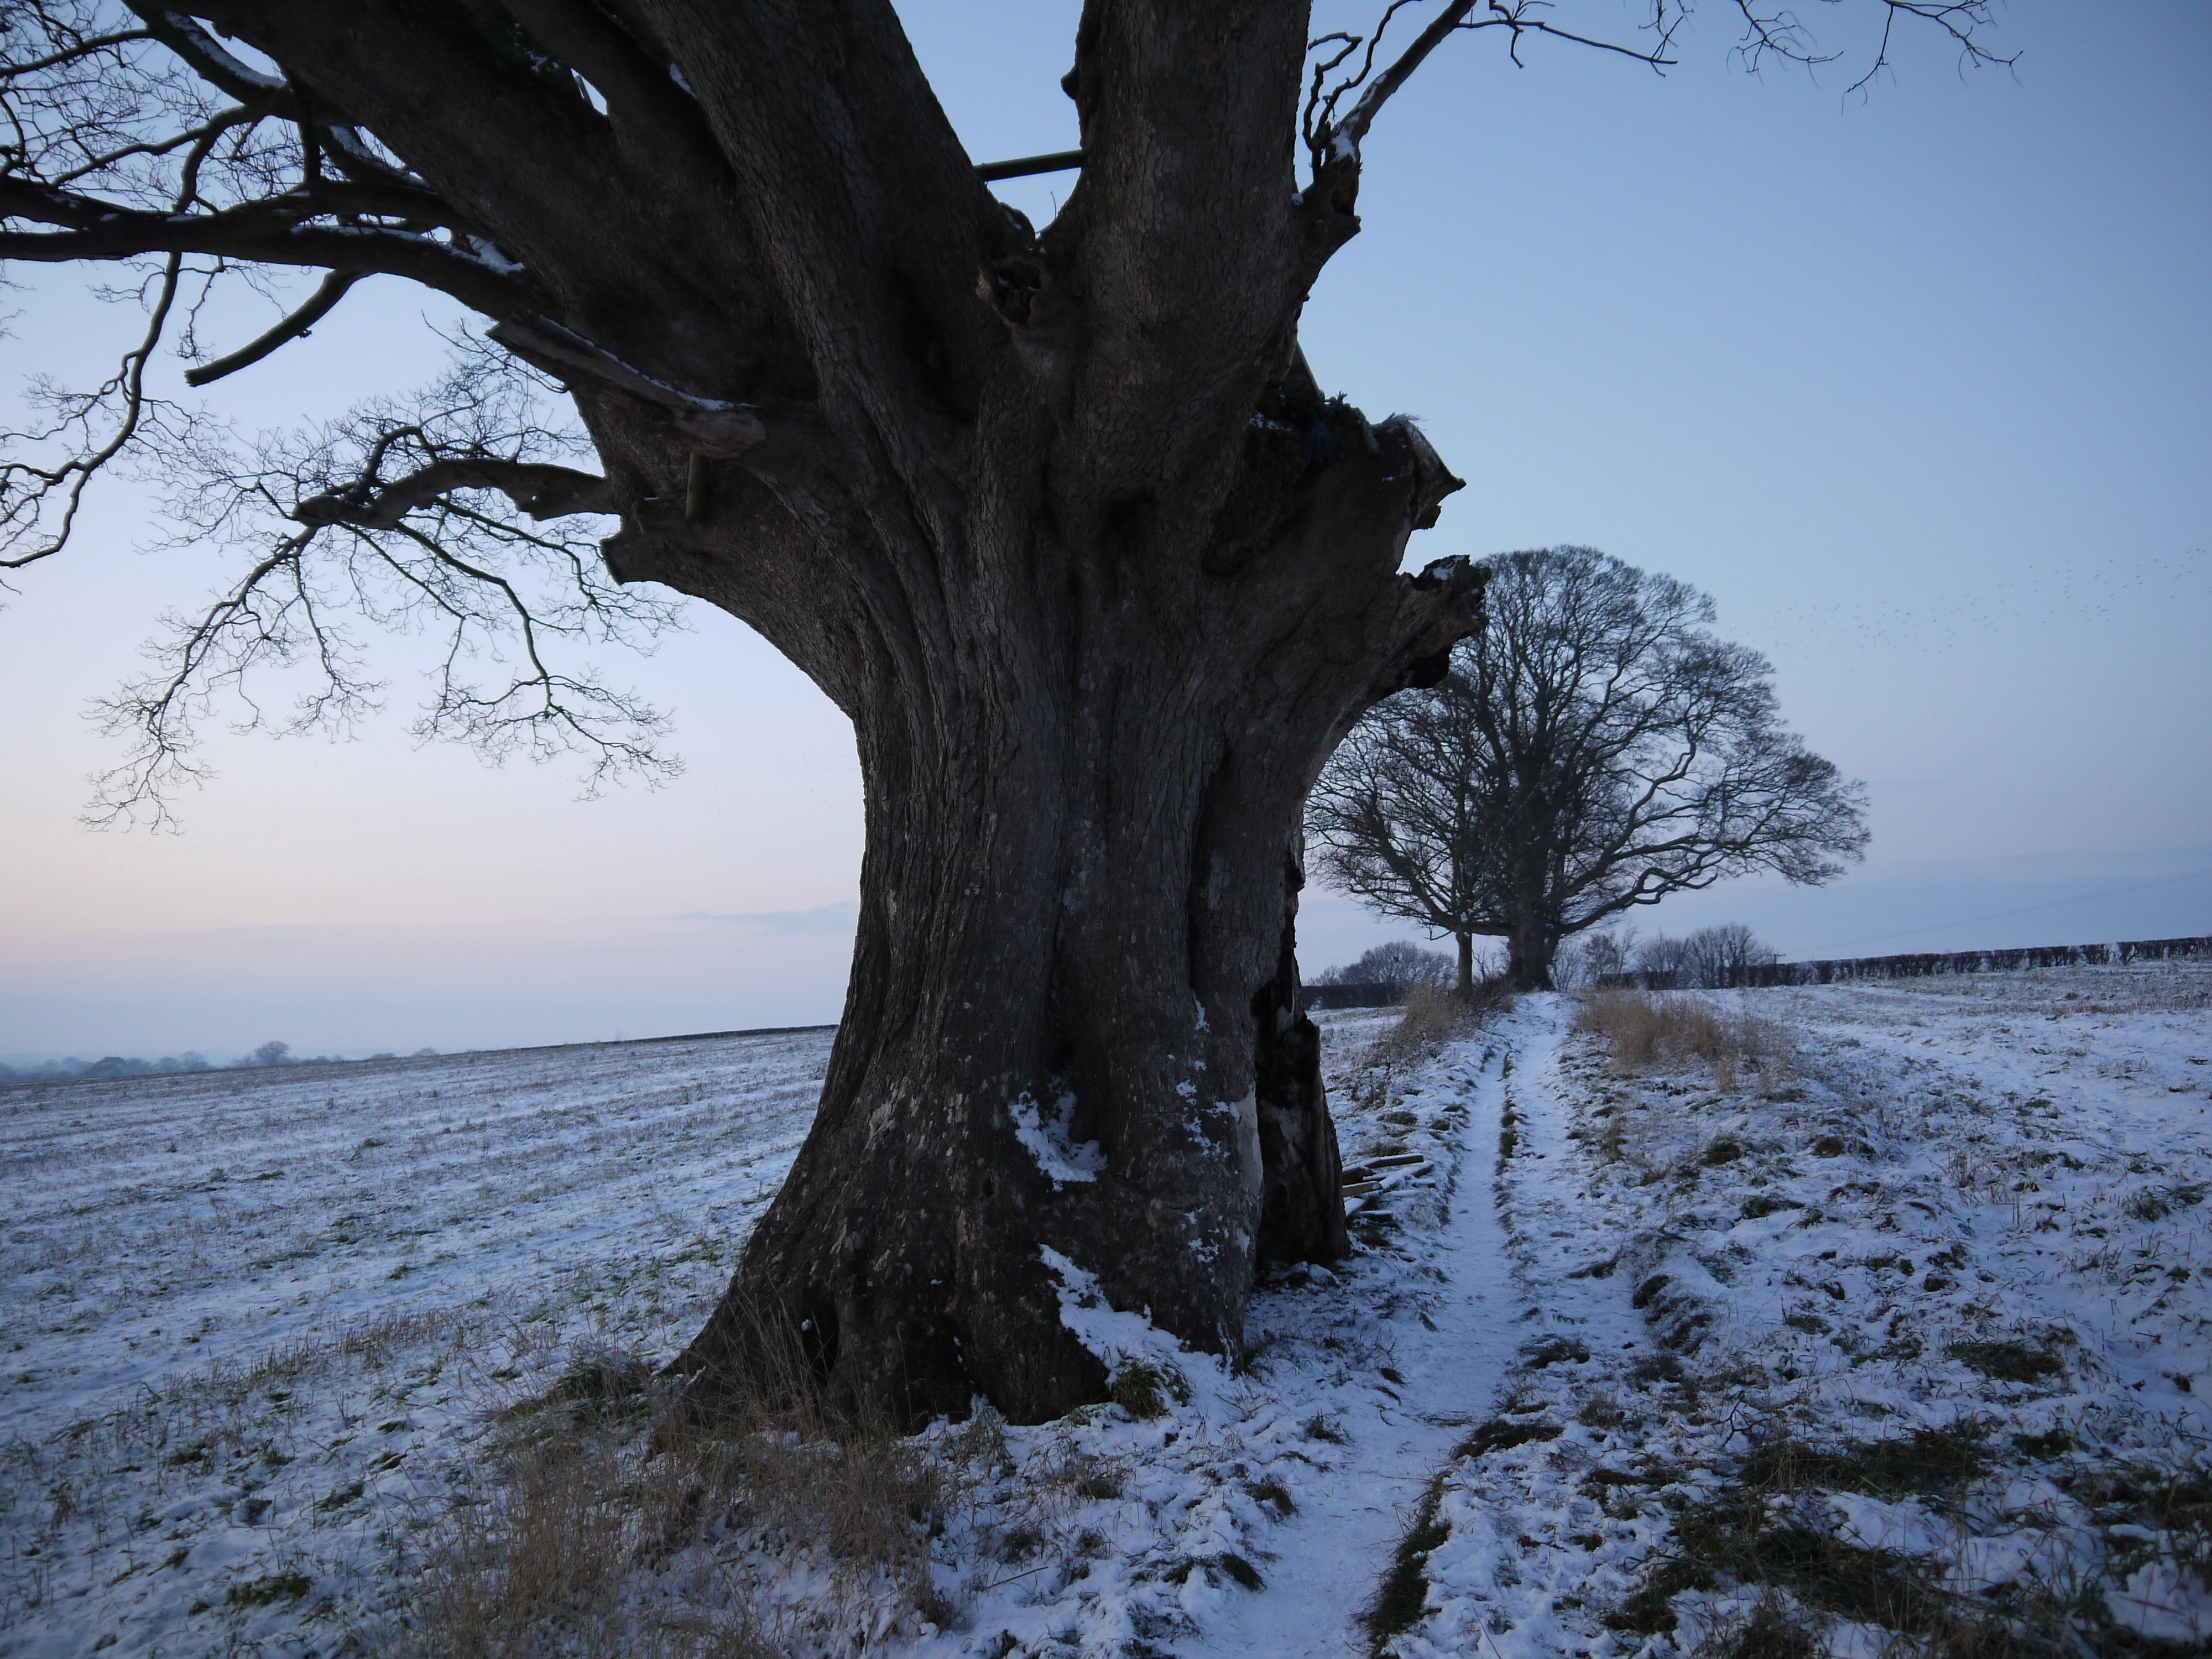 sycamore-tree-on-the-ox-heys--winter-scene